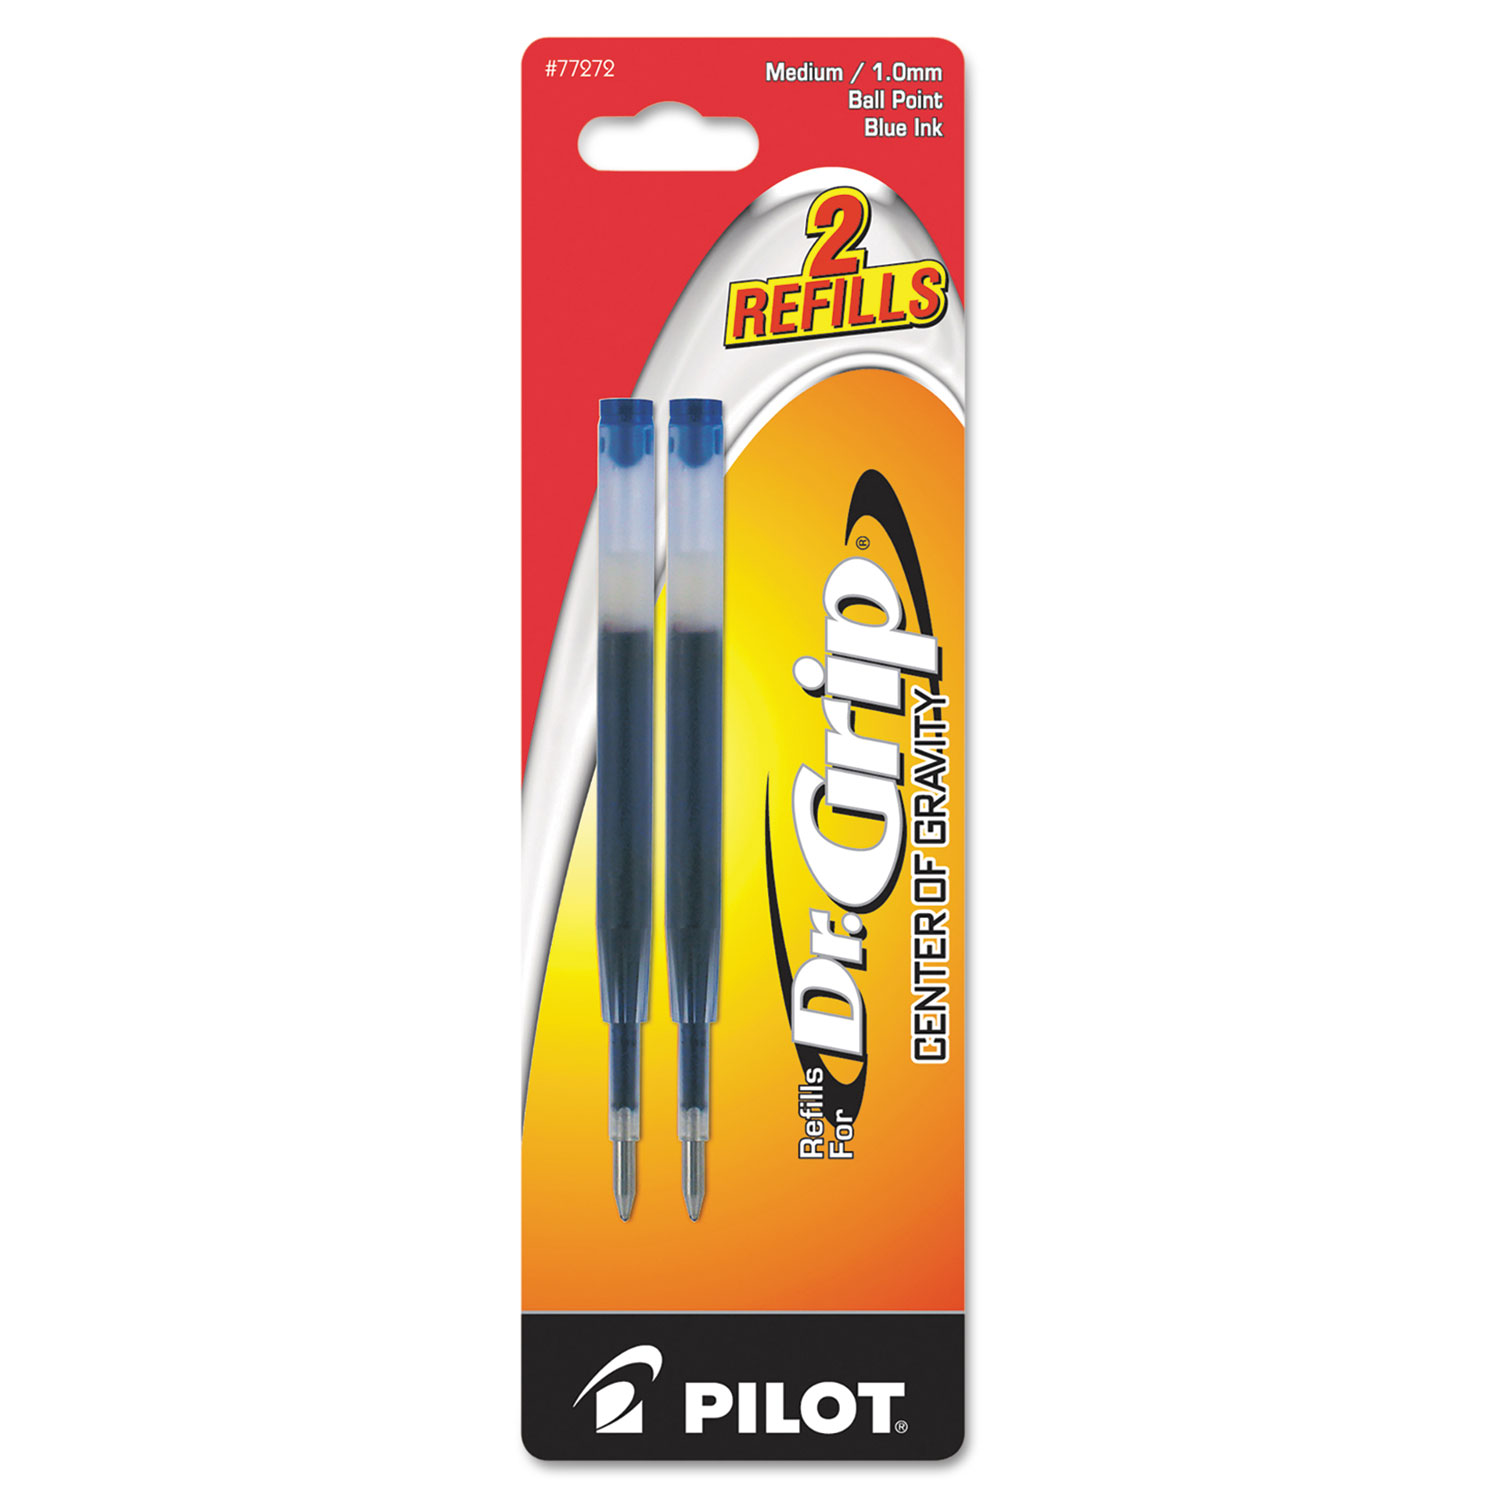  Pilot 77272 Refill for Pilot Dr. Grip Center of Gravity Pens, Medium Point, Blue Ink (PIL77272) 